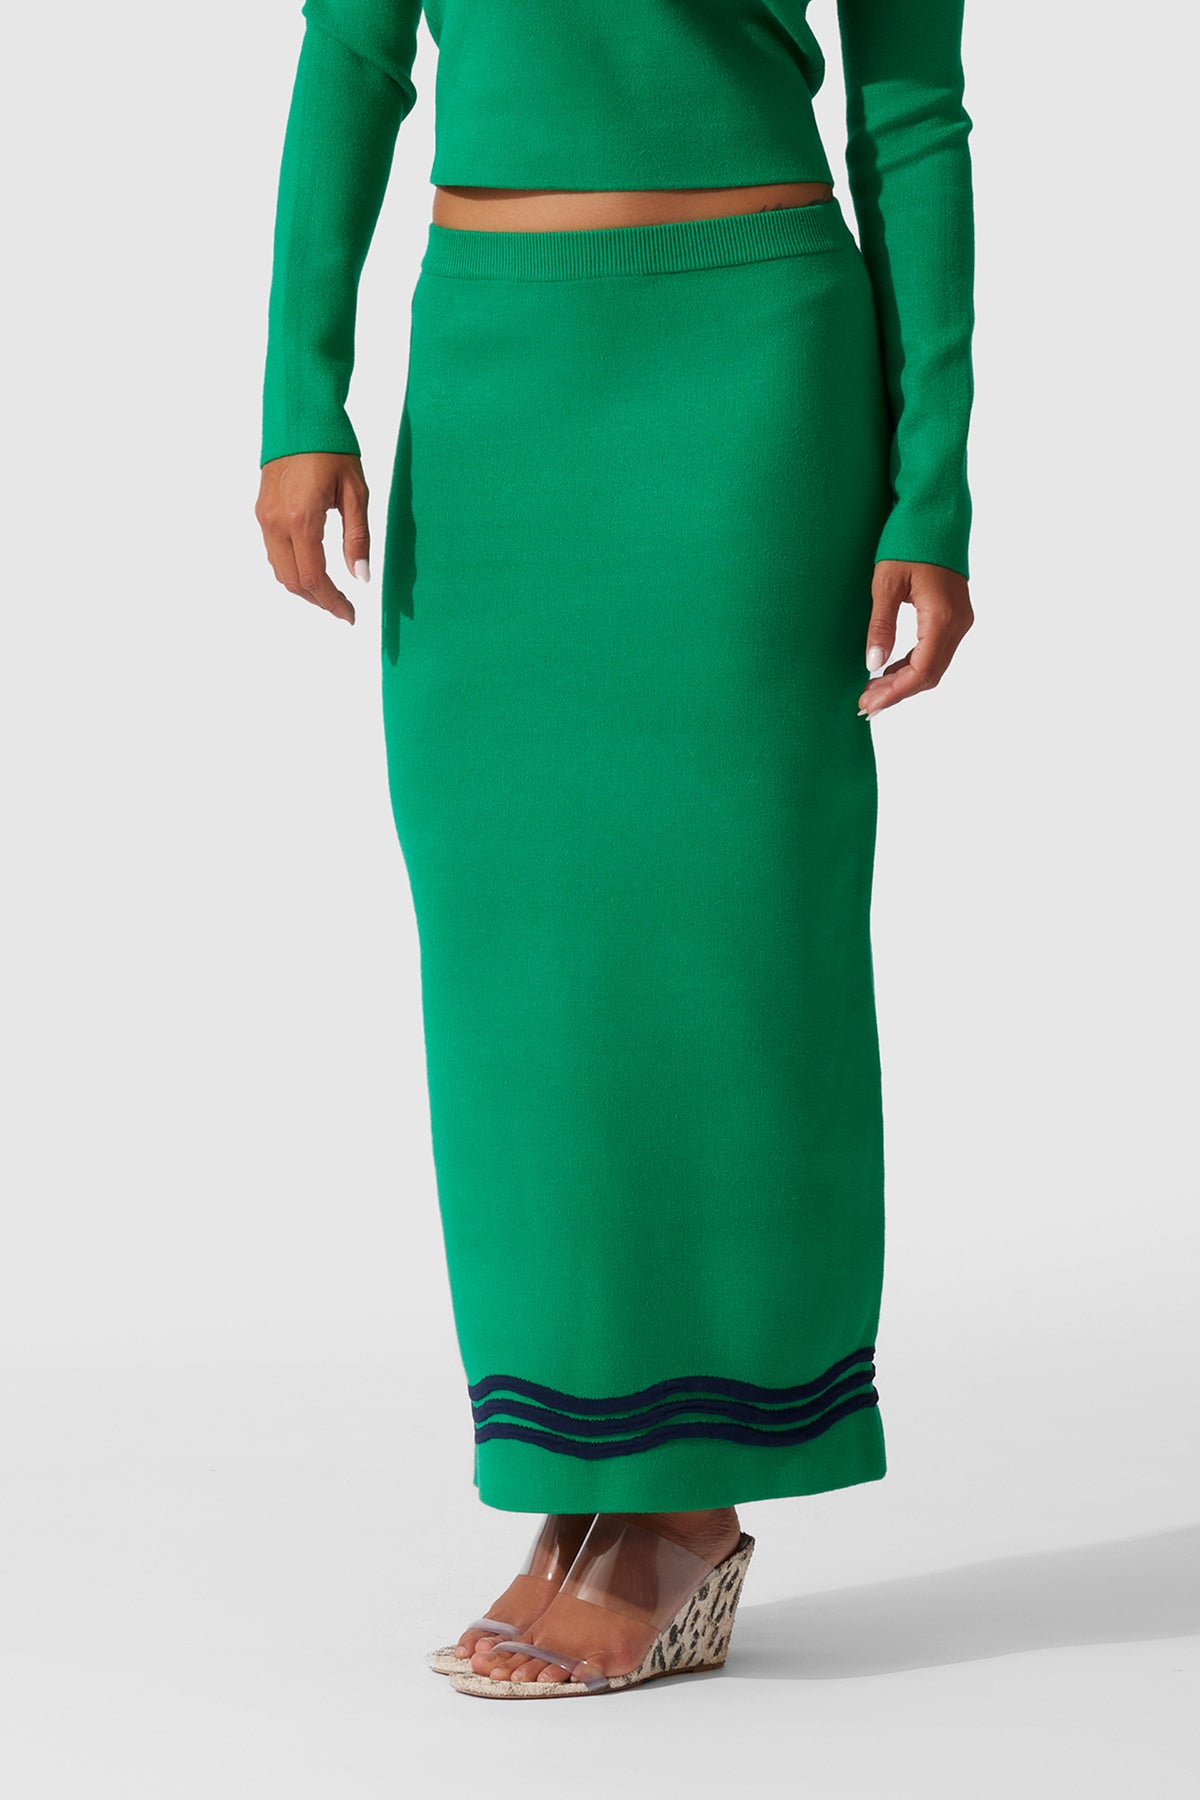 Venaya Wave Knit Skirt - Emerald